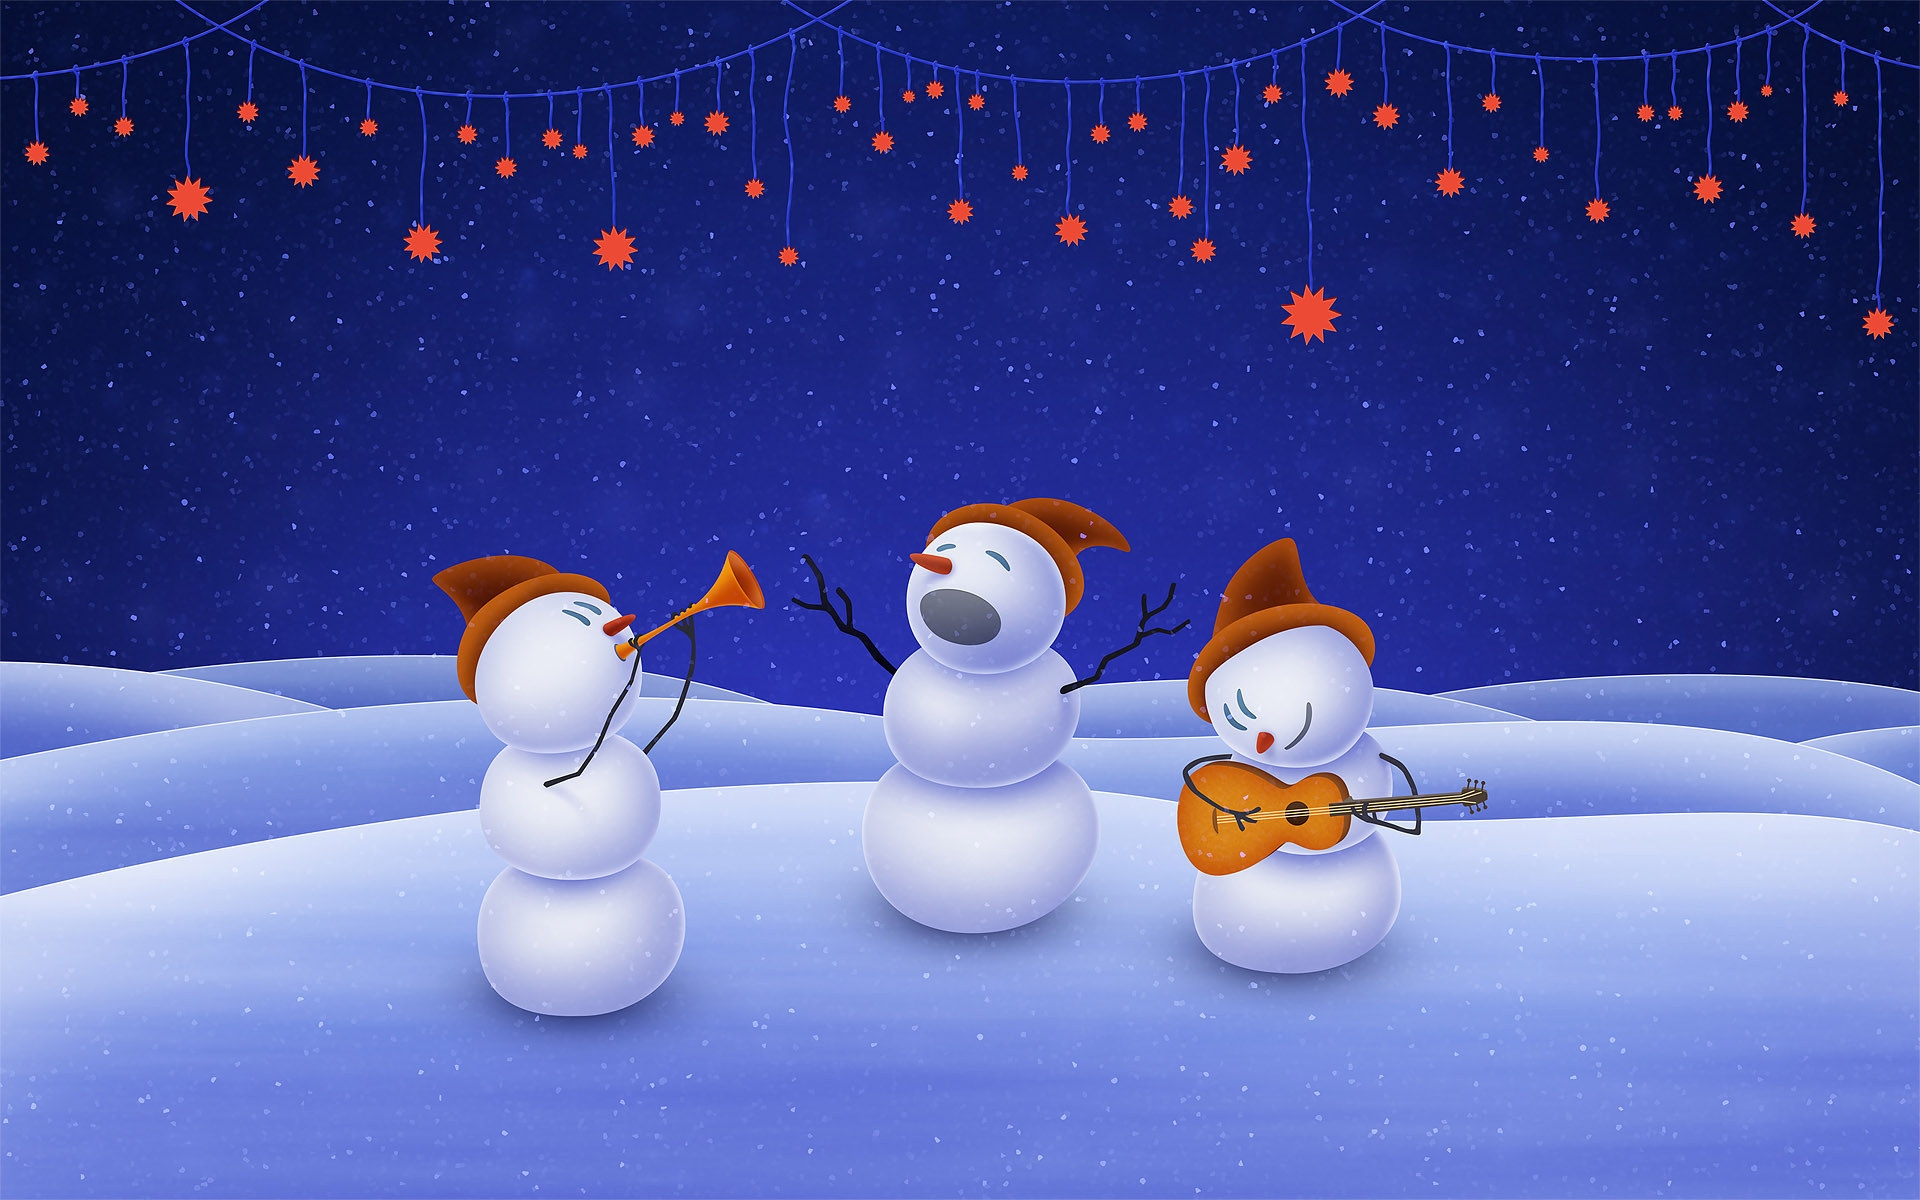 Snowman Wallpaper Pictures Image